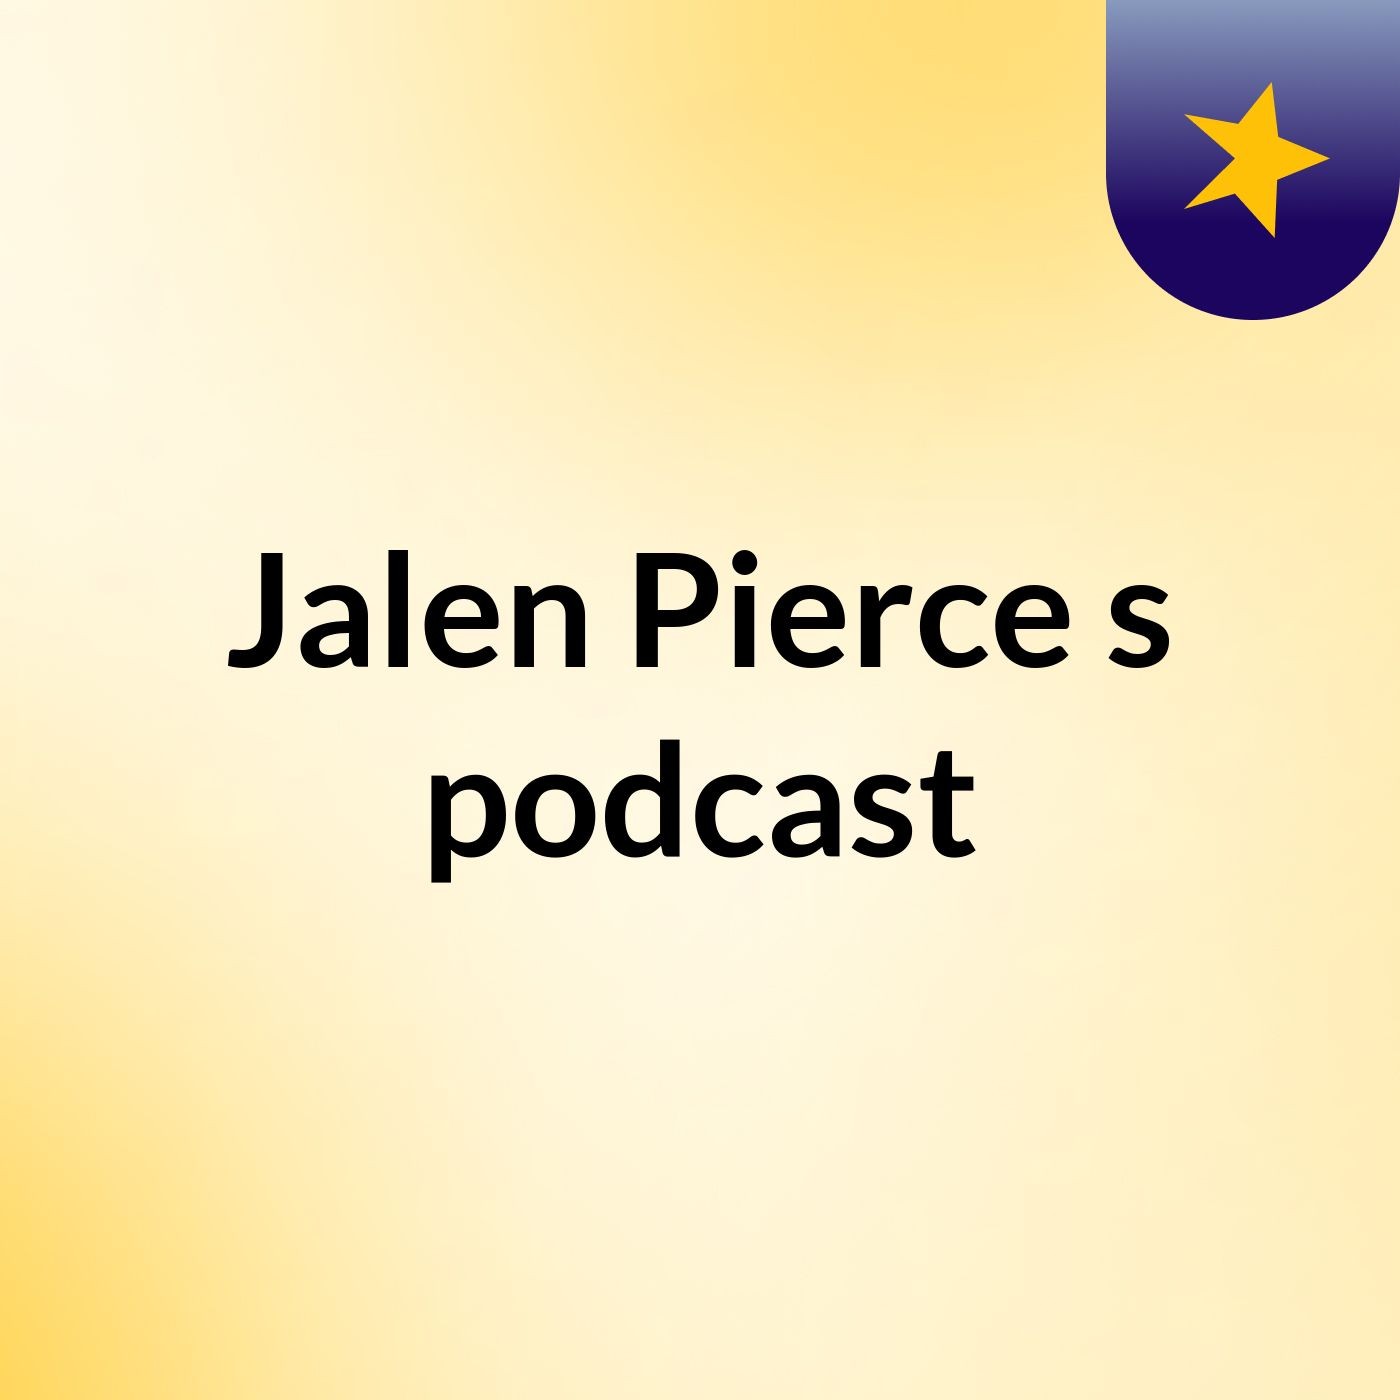 Episode 5 - Jalen Pierce's podcast